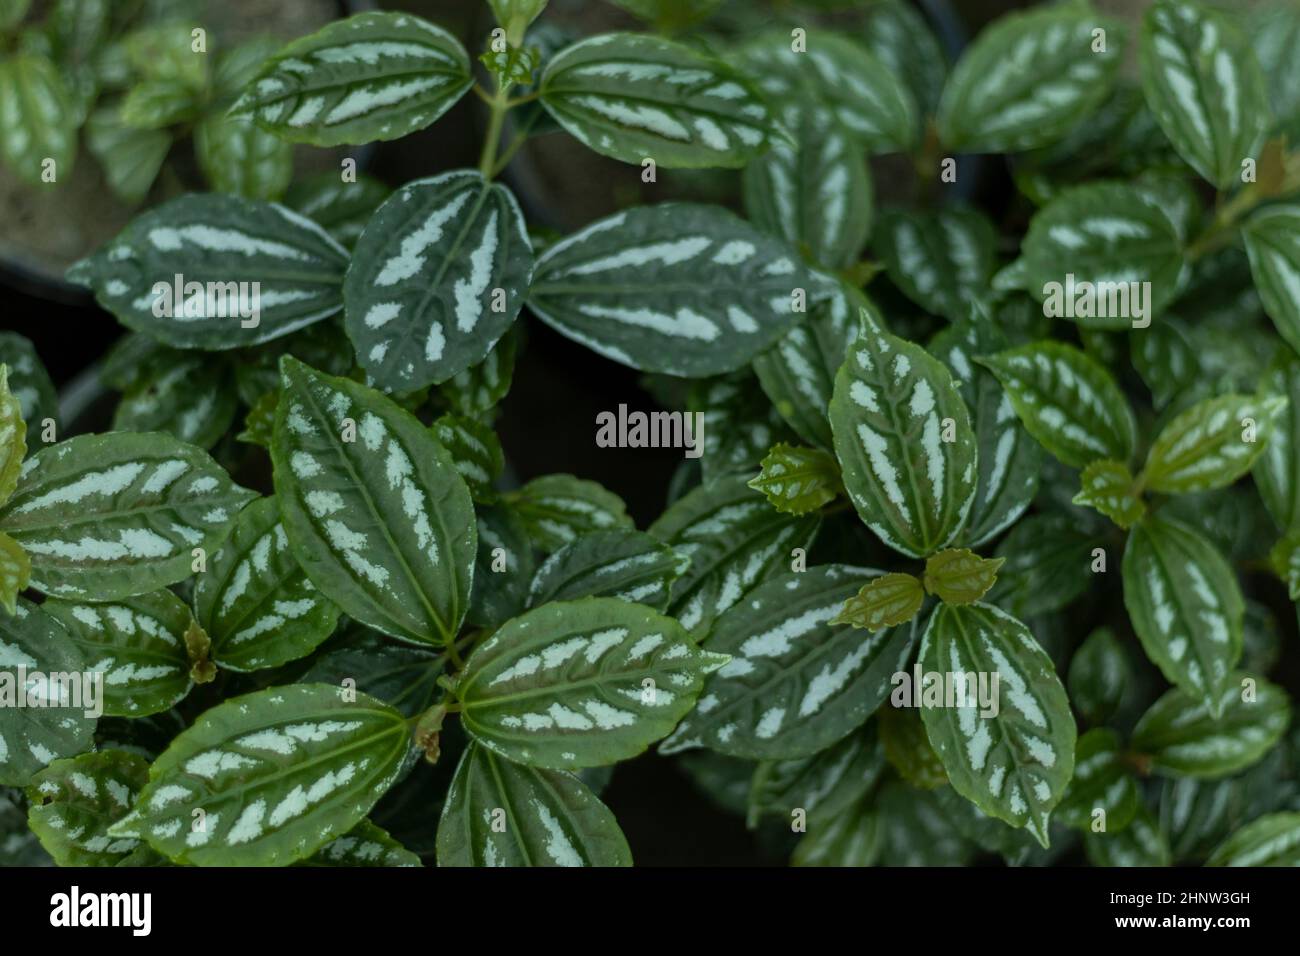 Pilea Cadierei leaves texture background Stock Photo